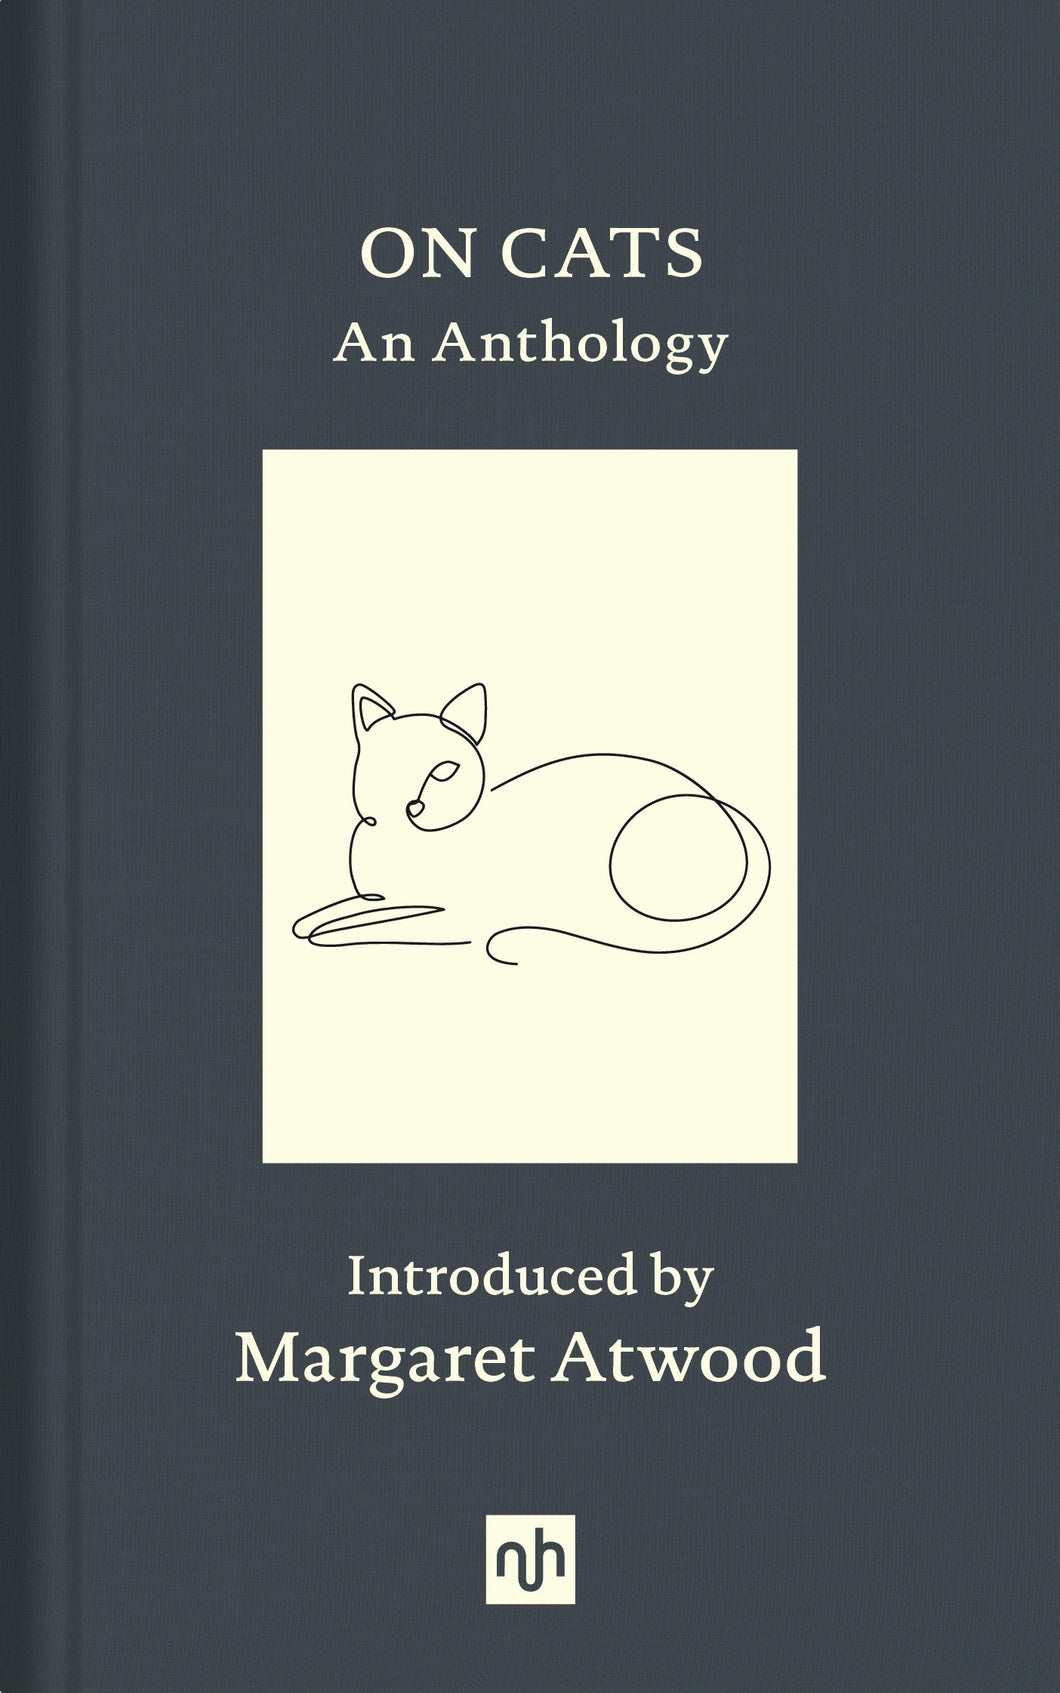 On Cats: An Anthology ร้านหนังสือและสิ่งของ เป็นร้านหนังสือภาษาอังกฤษหายาก และร้านกาแฟ หรือ บุ๊คคาเฟ่ ตั้งอยู่สุขุมวิท กรุงเทพ